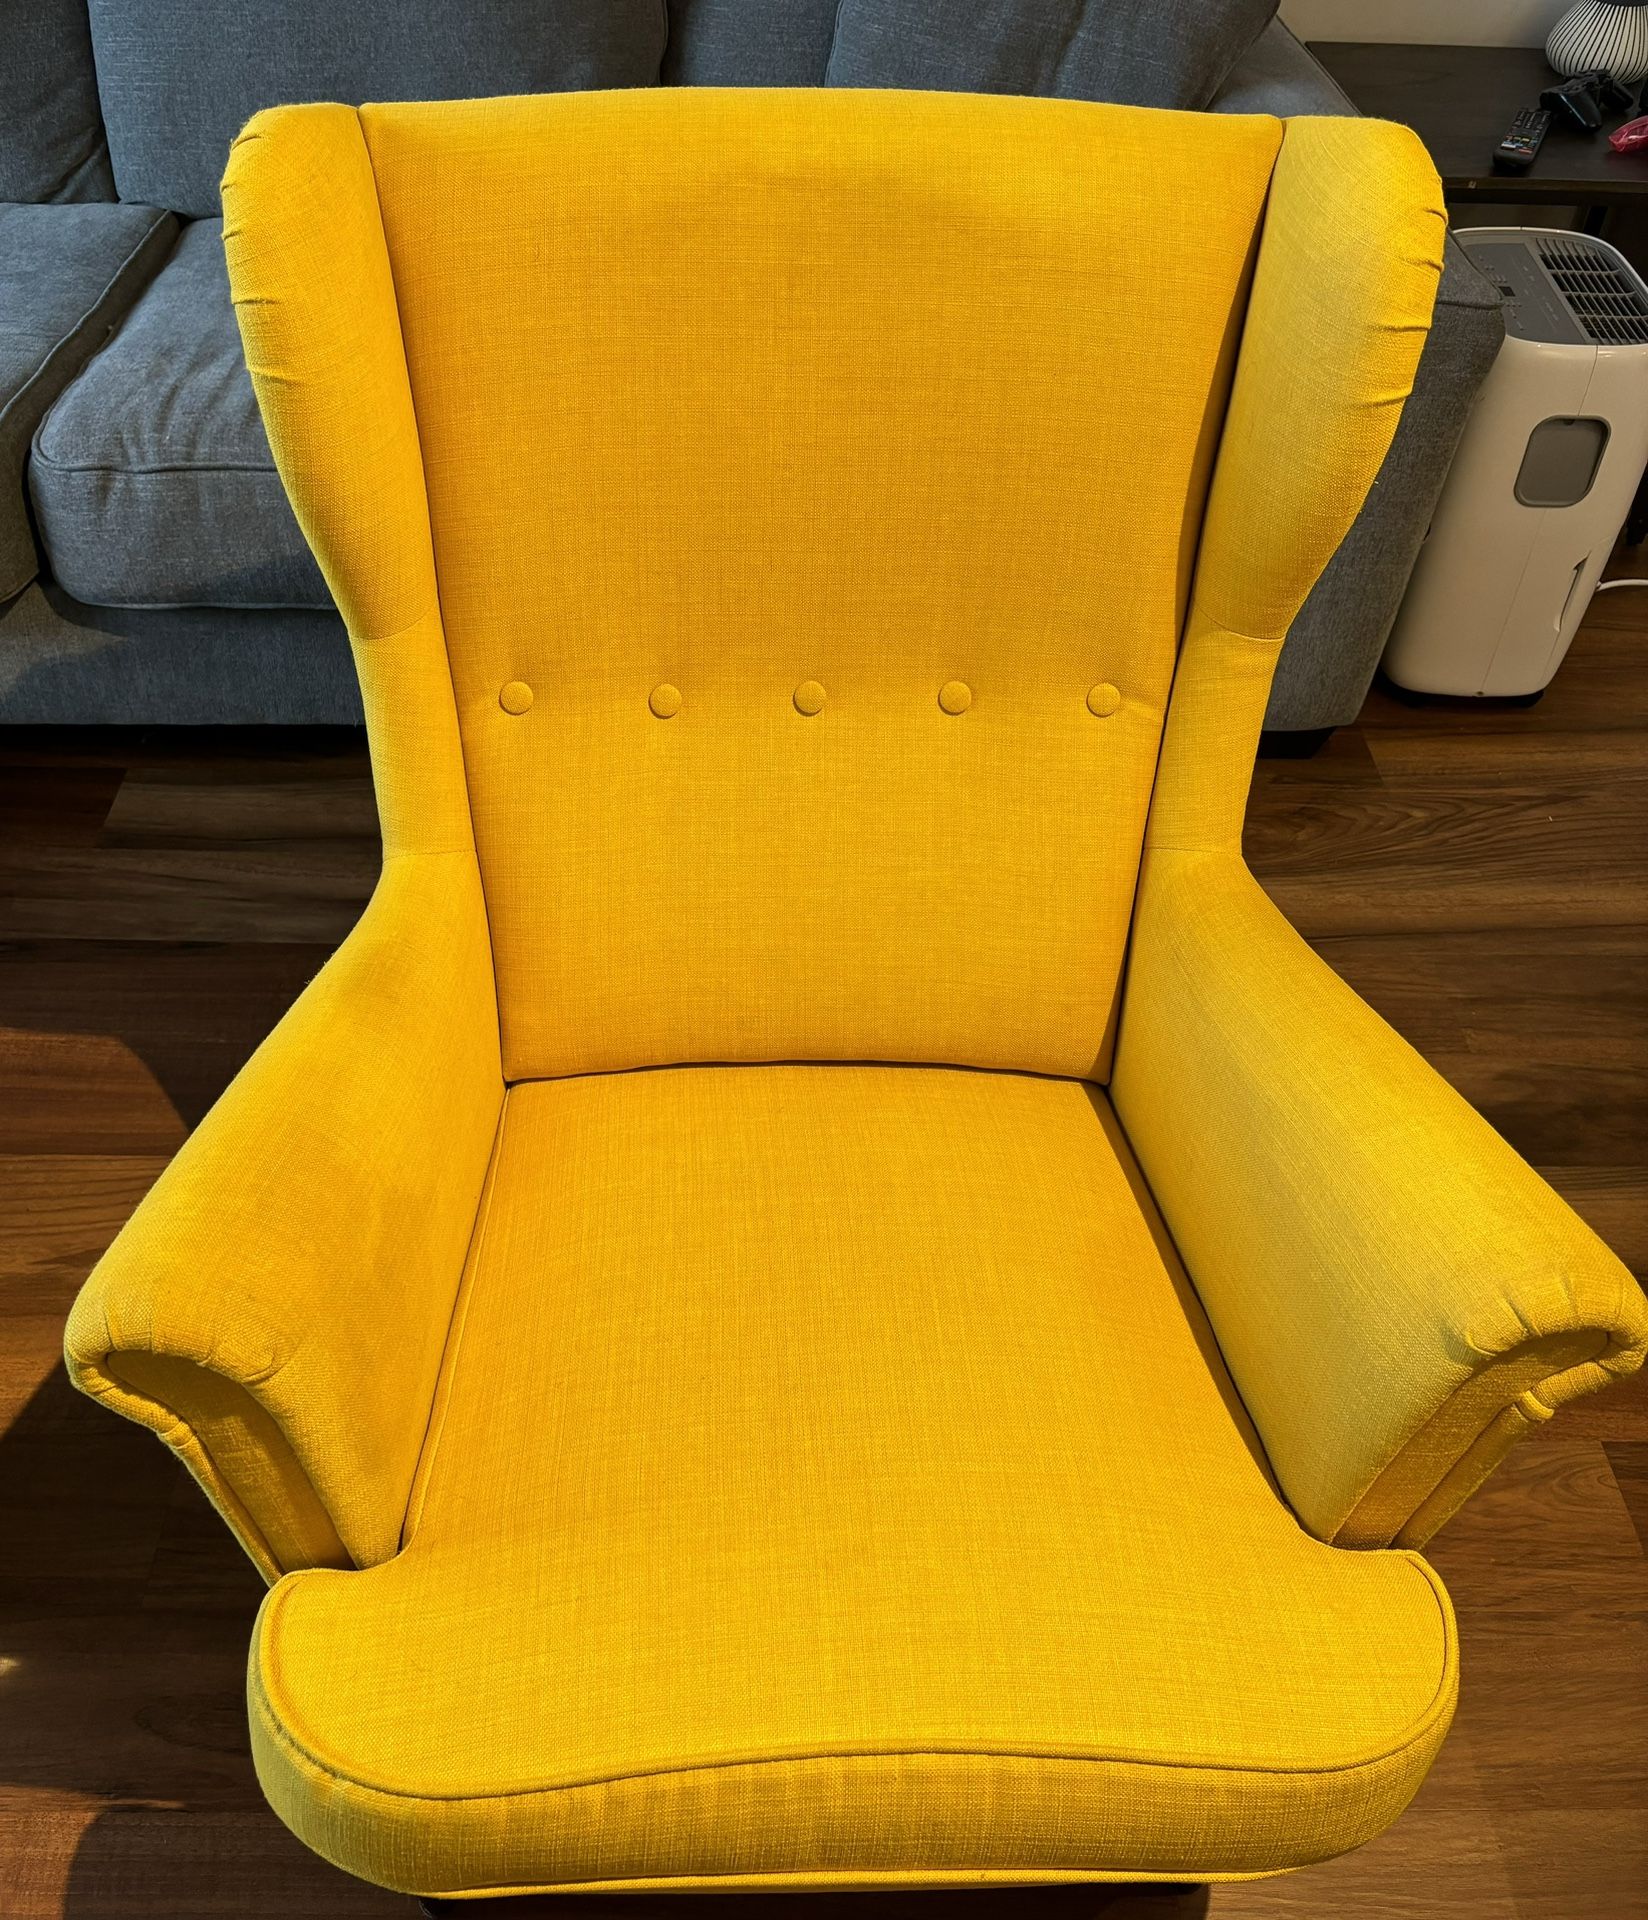 IKEA Yellow Chair